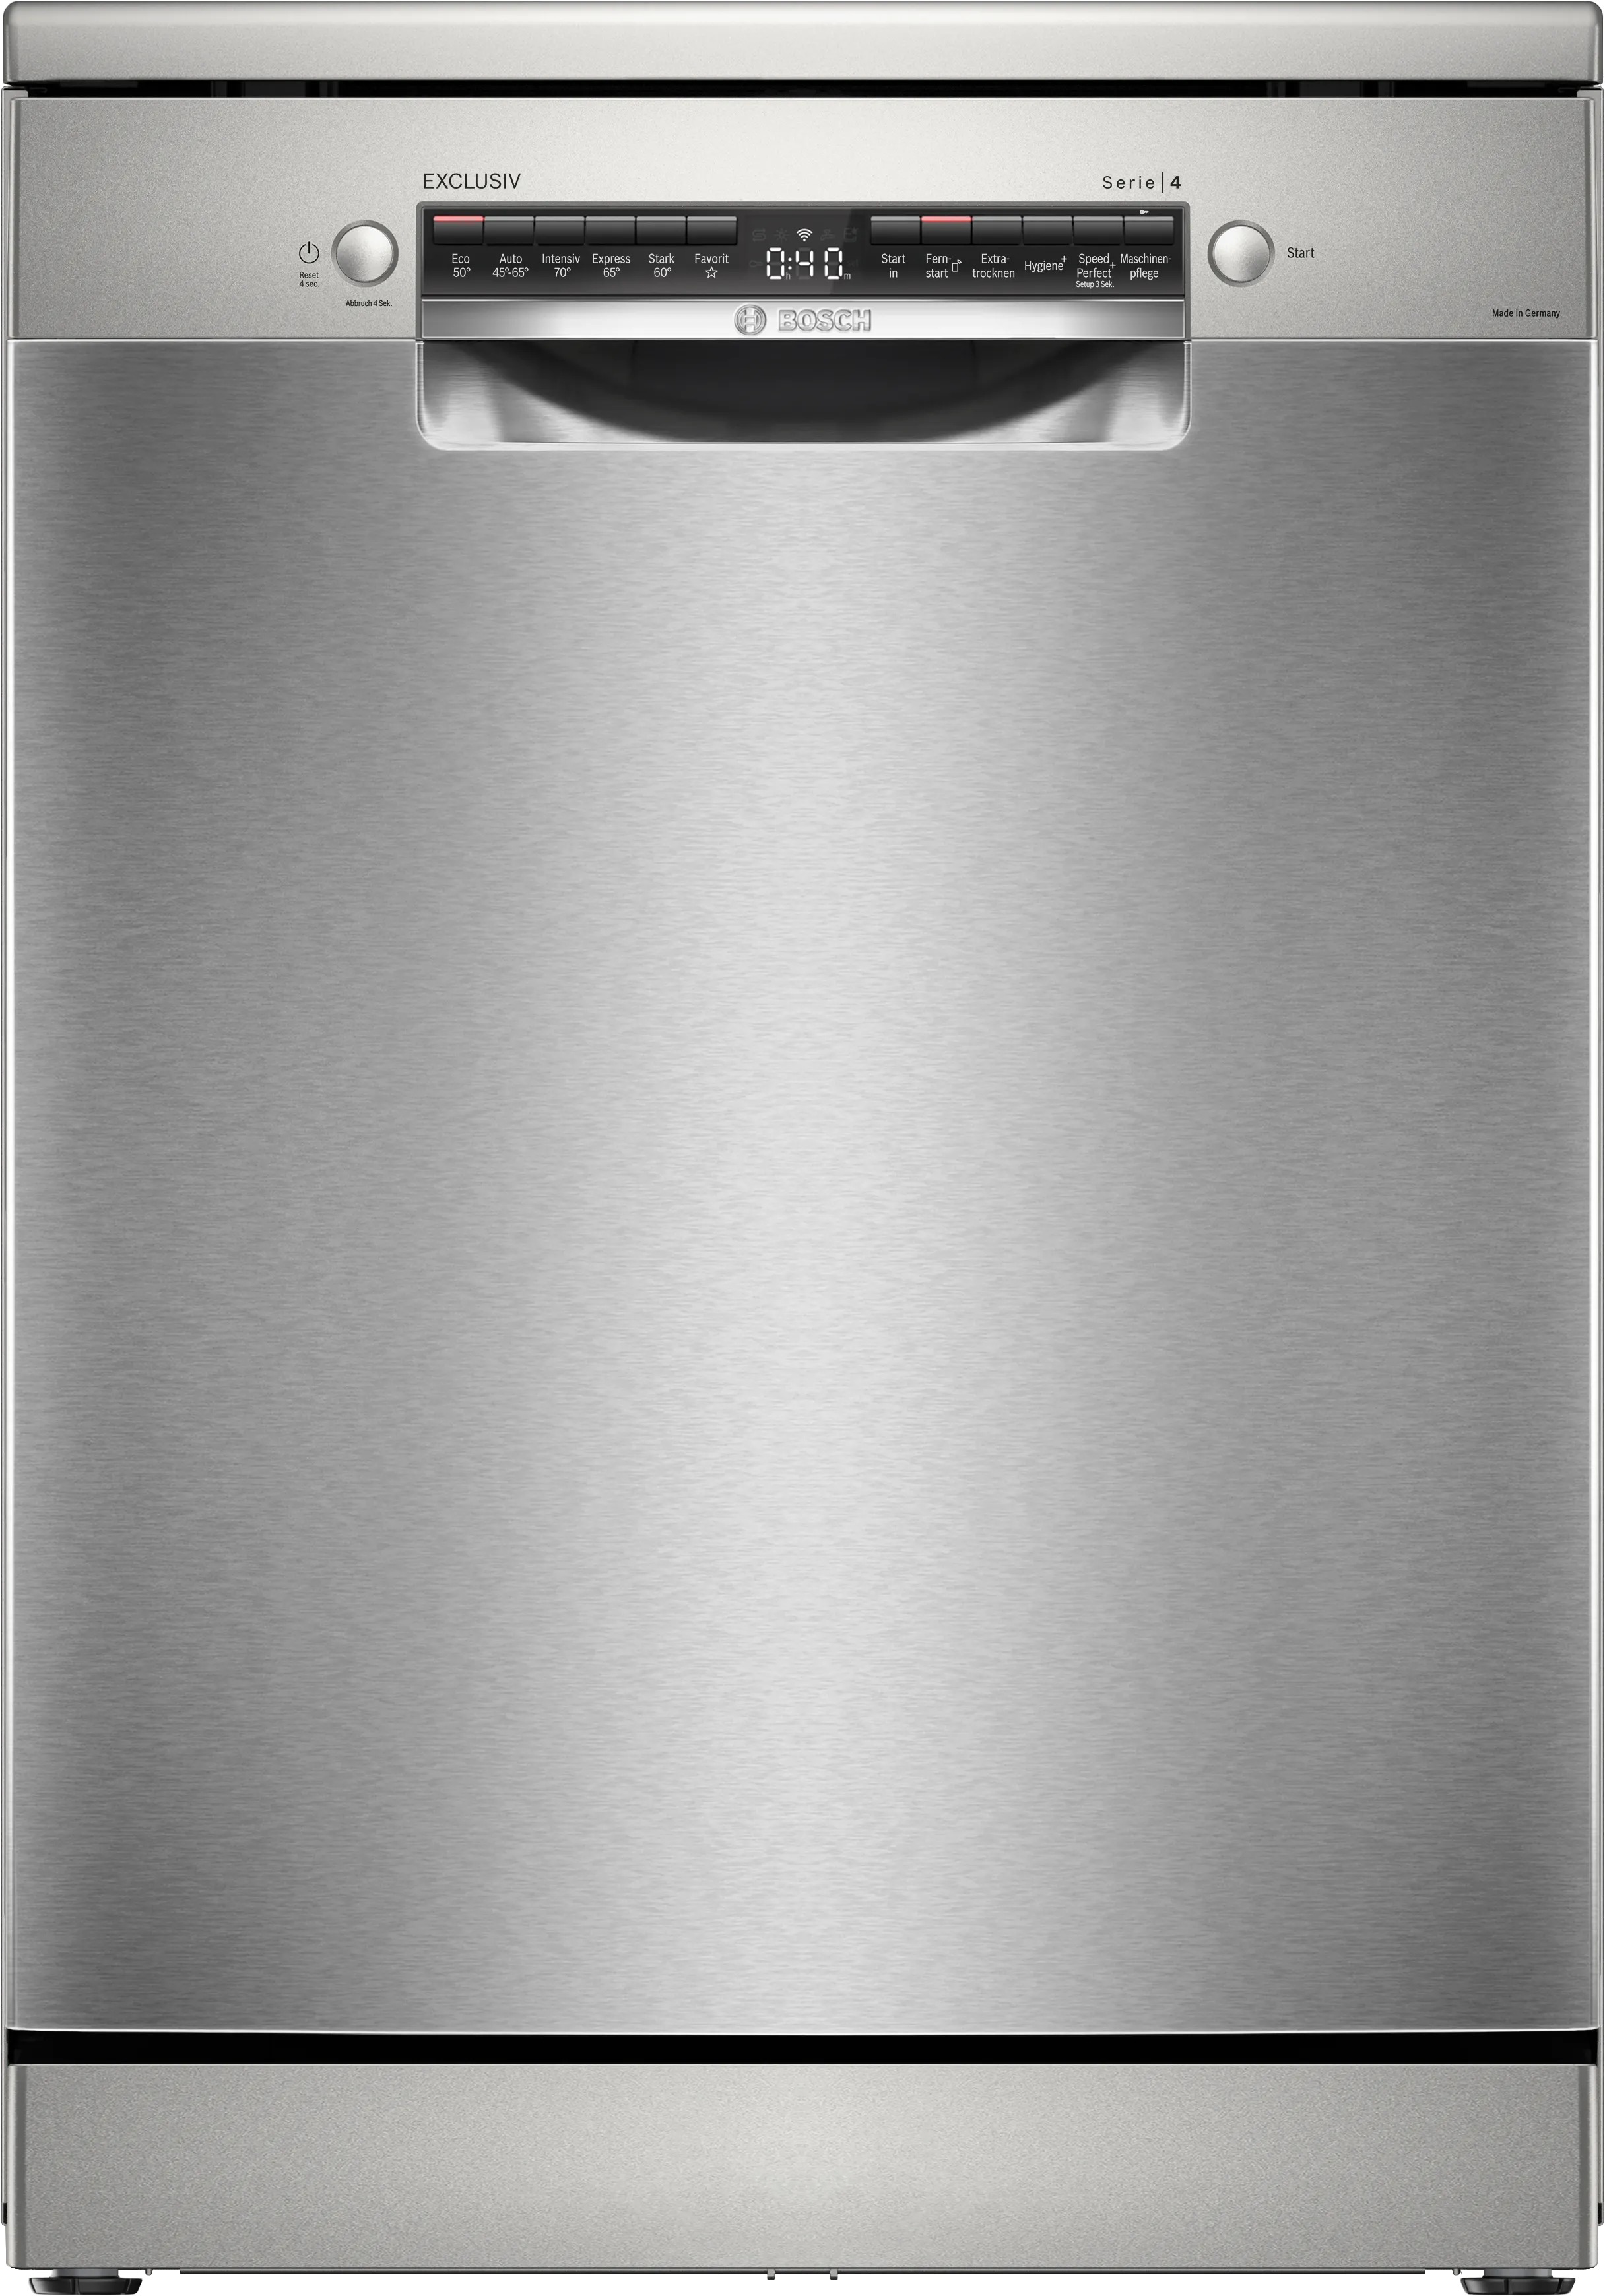 Series 4 free-standing dishwasher 60 cm Brushed steel anti-fingerprint 